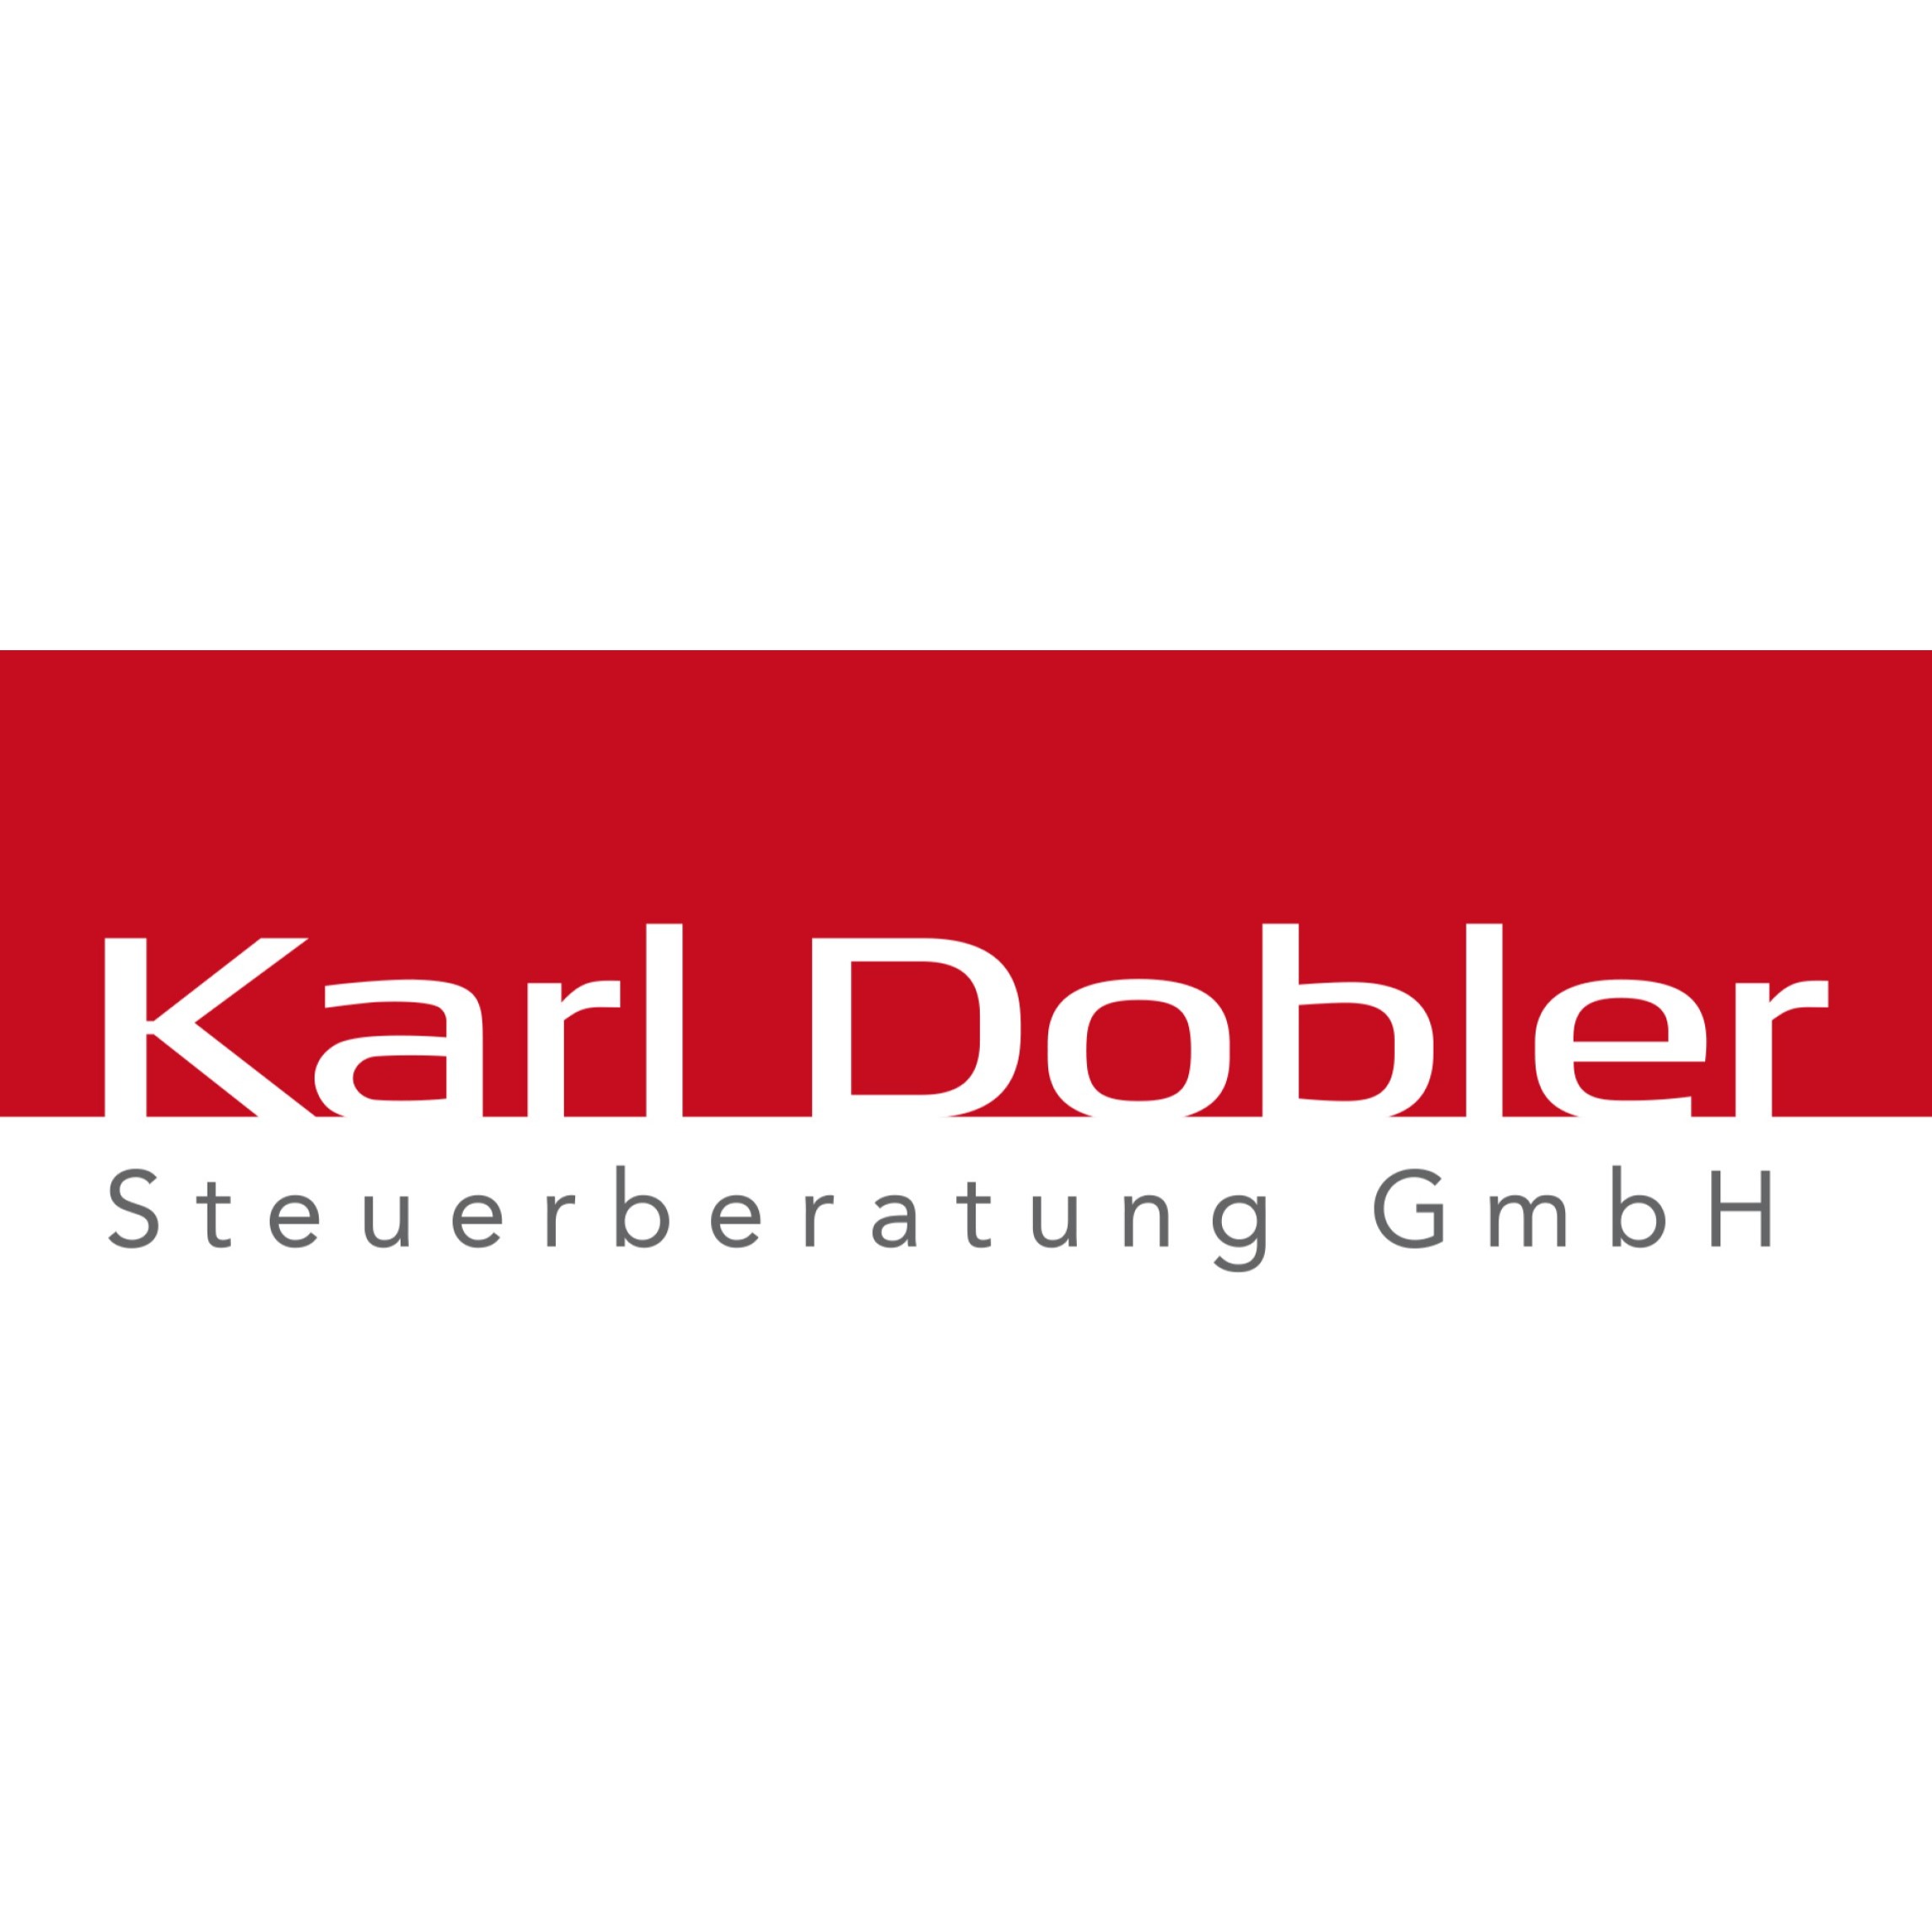 Karl Dobler Steuerberatung GmbH Logo